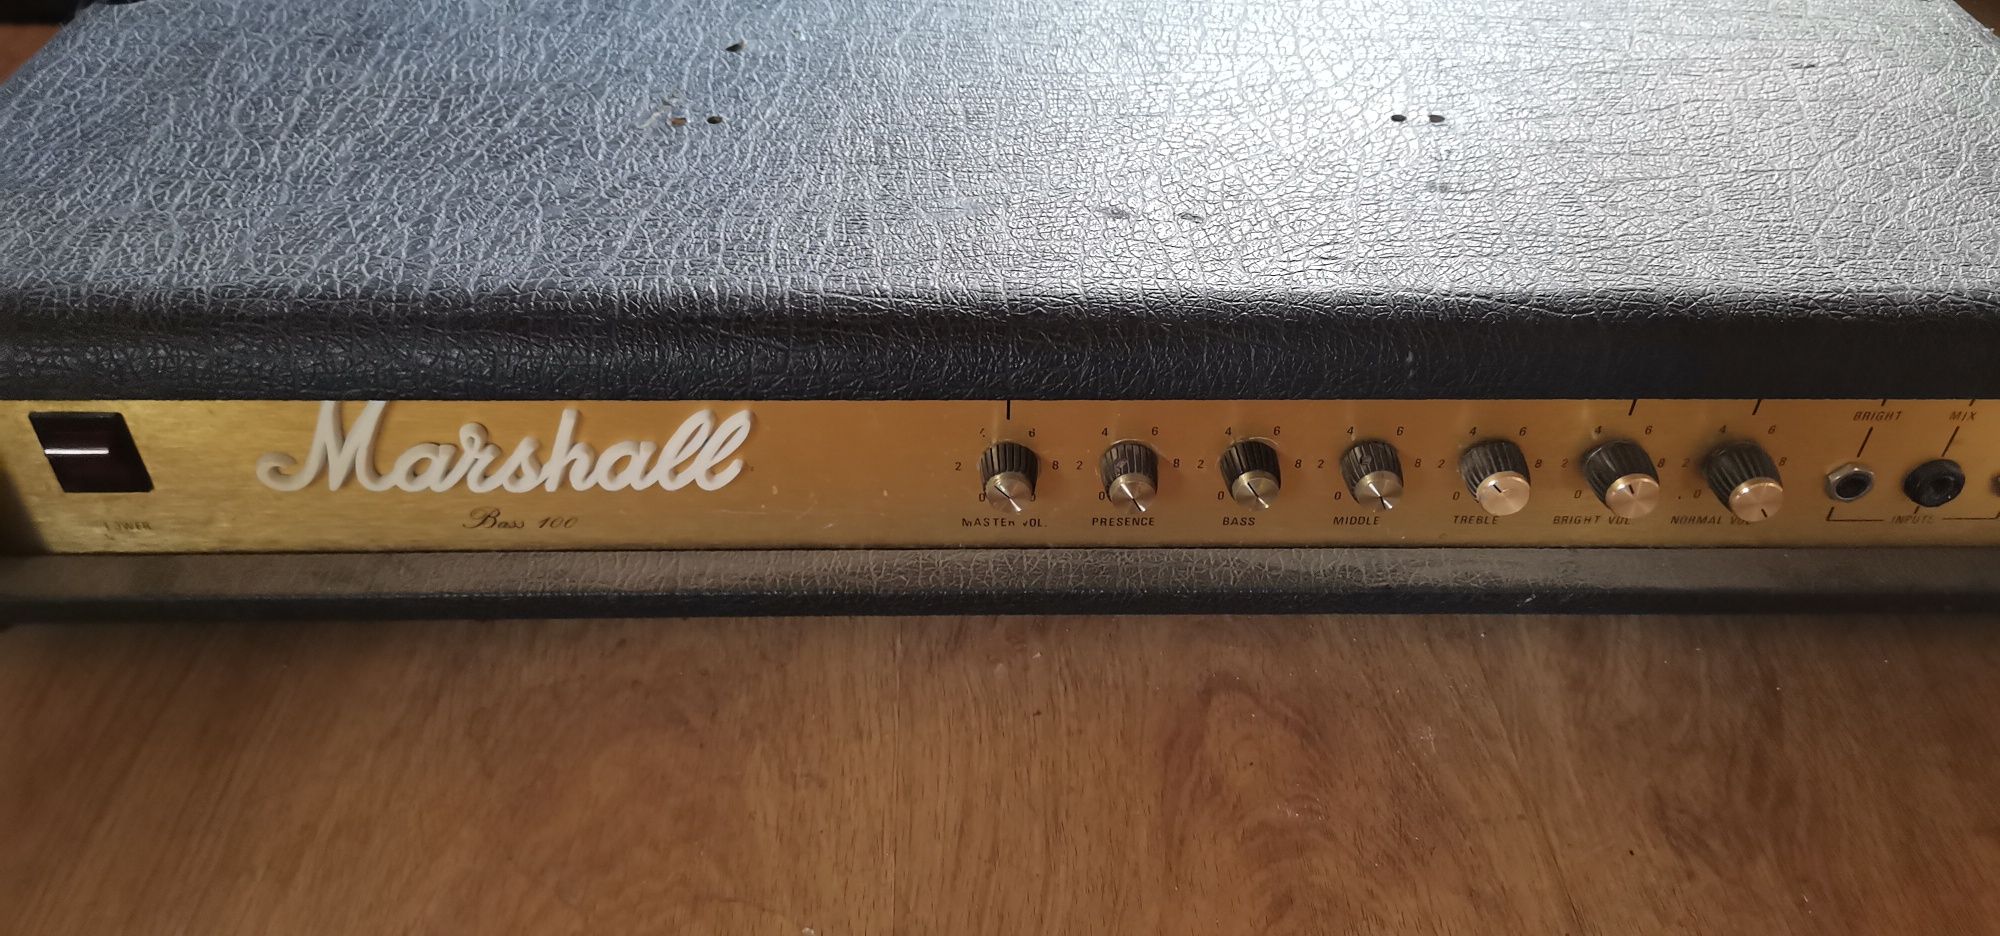 Marshall bass 100 wzmacniacz 2099 vintage lata 70